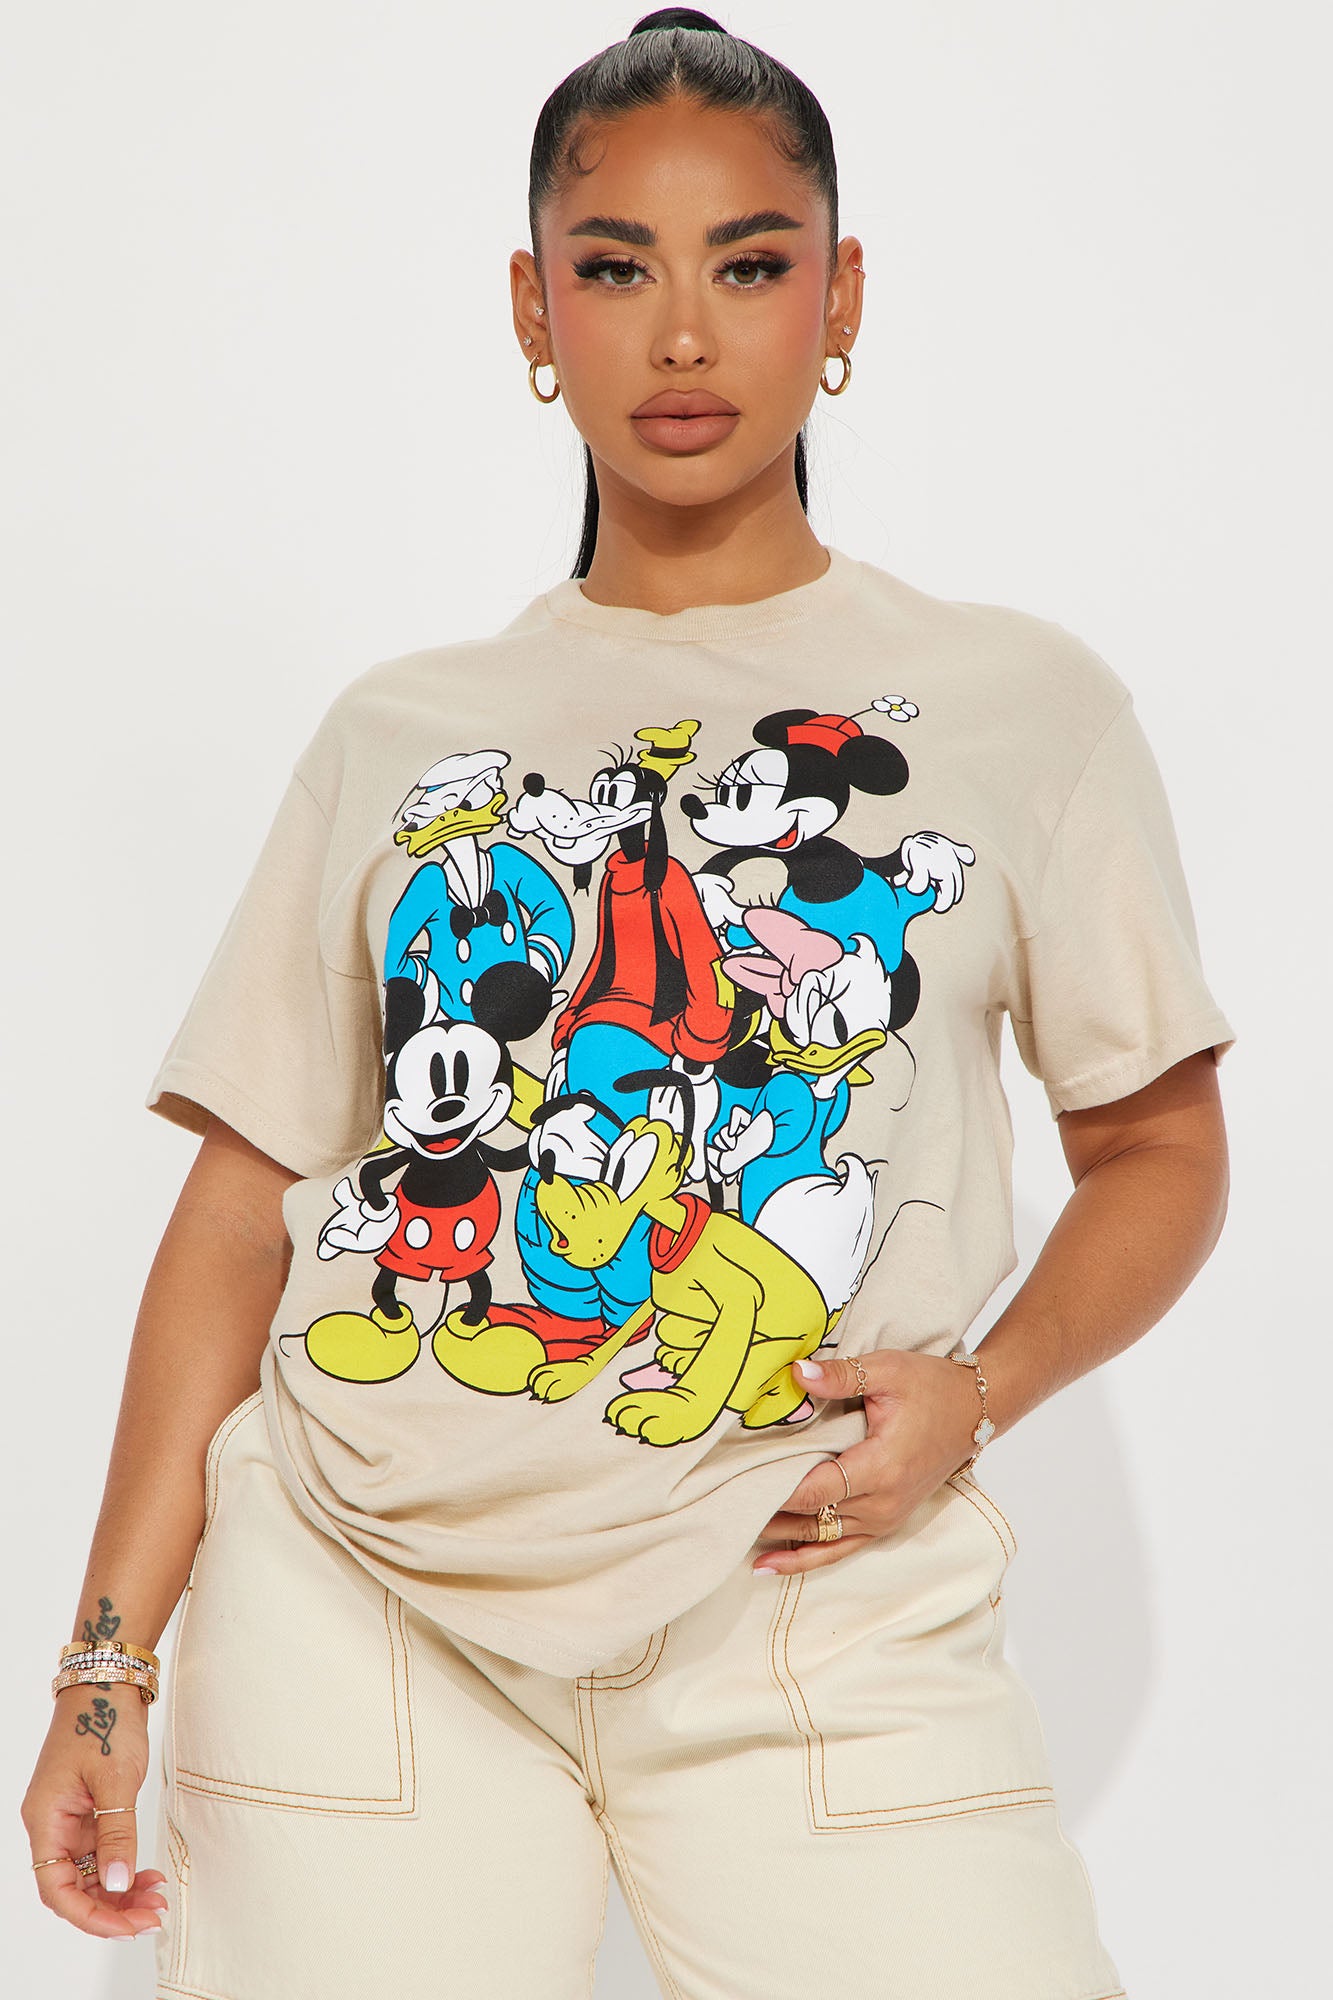 Disney Mickey Sensational Six Vintage Cotton Fabric